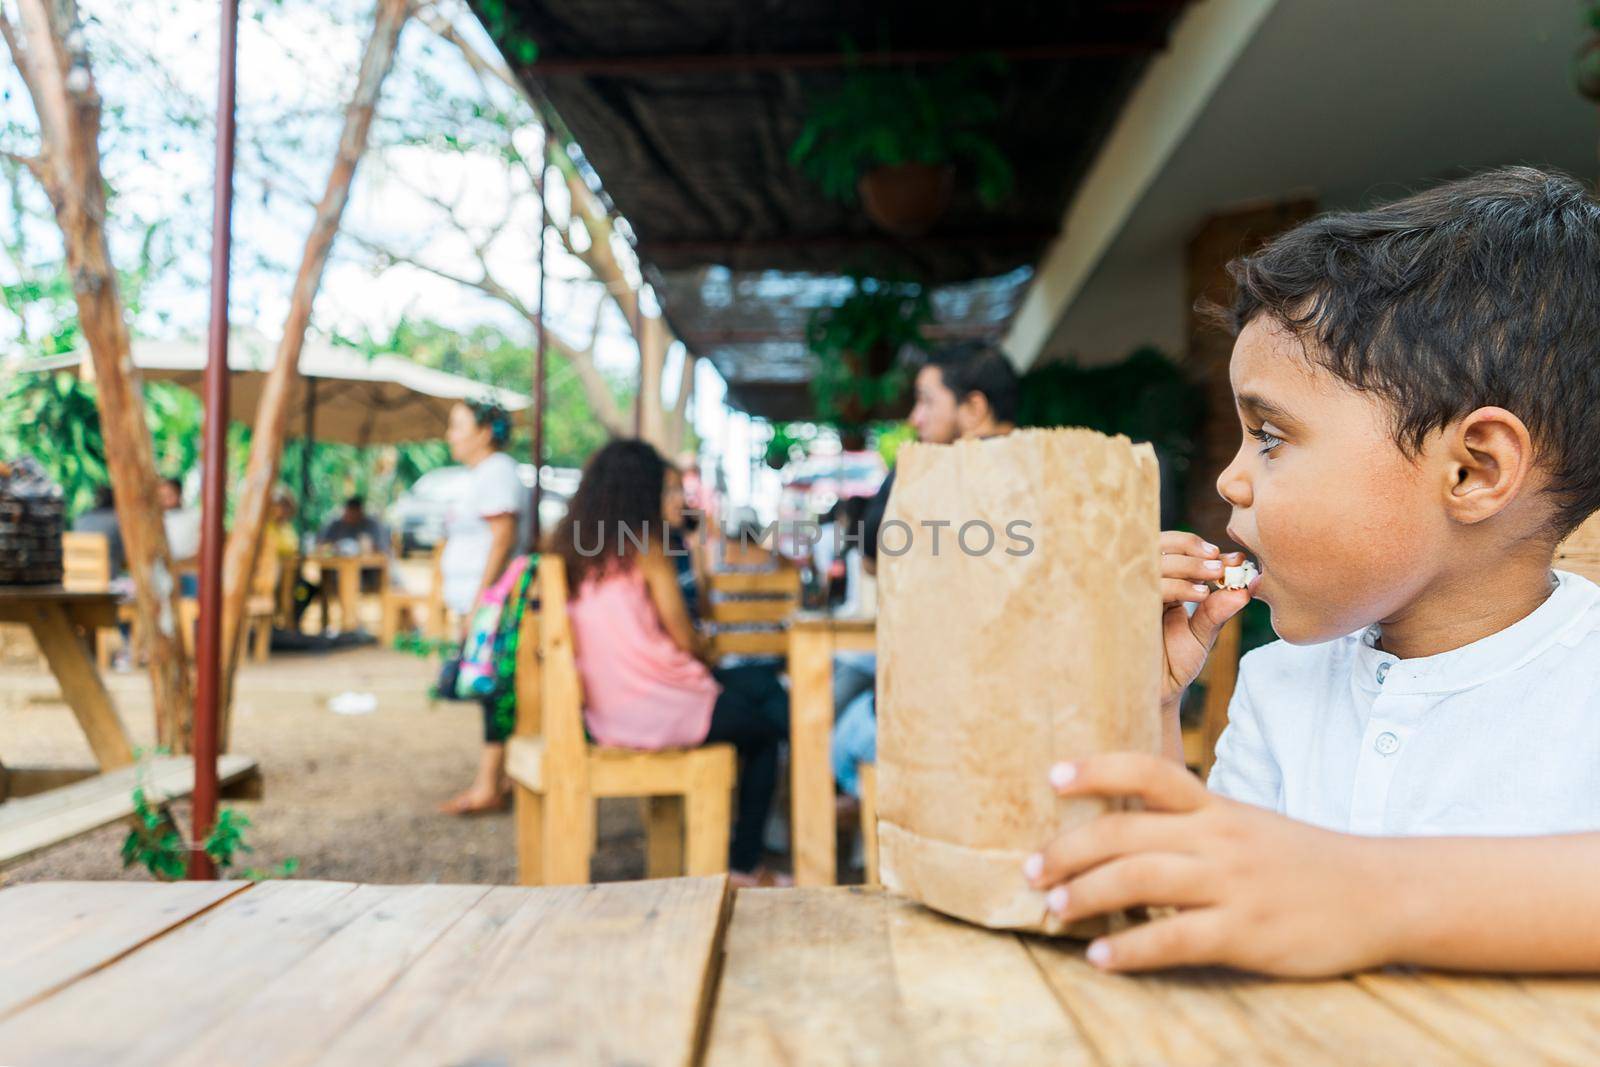 Latin boy eating popcorn in a restaurant for dessert by cfalvarez